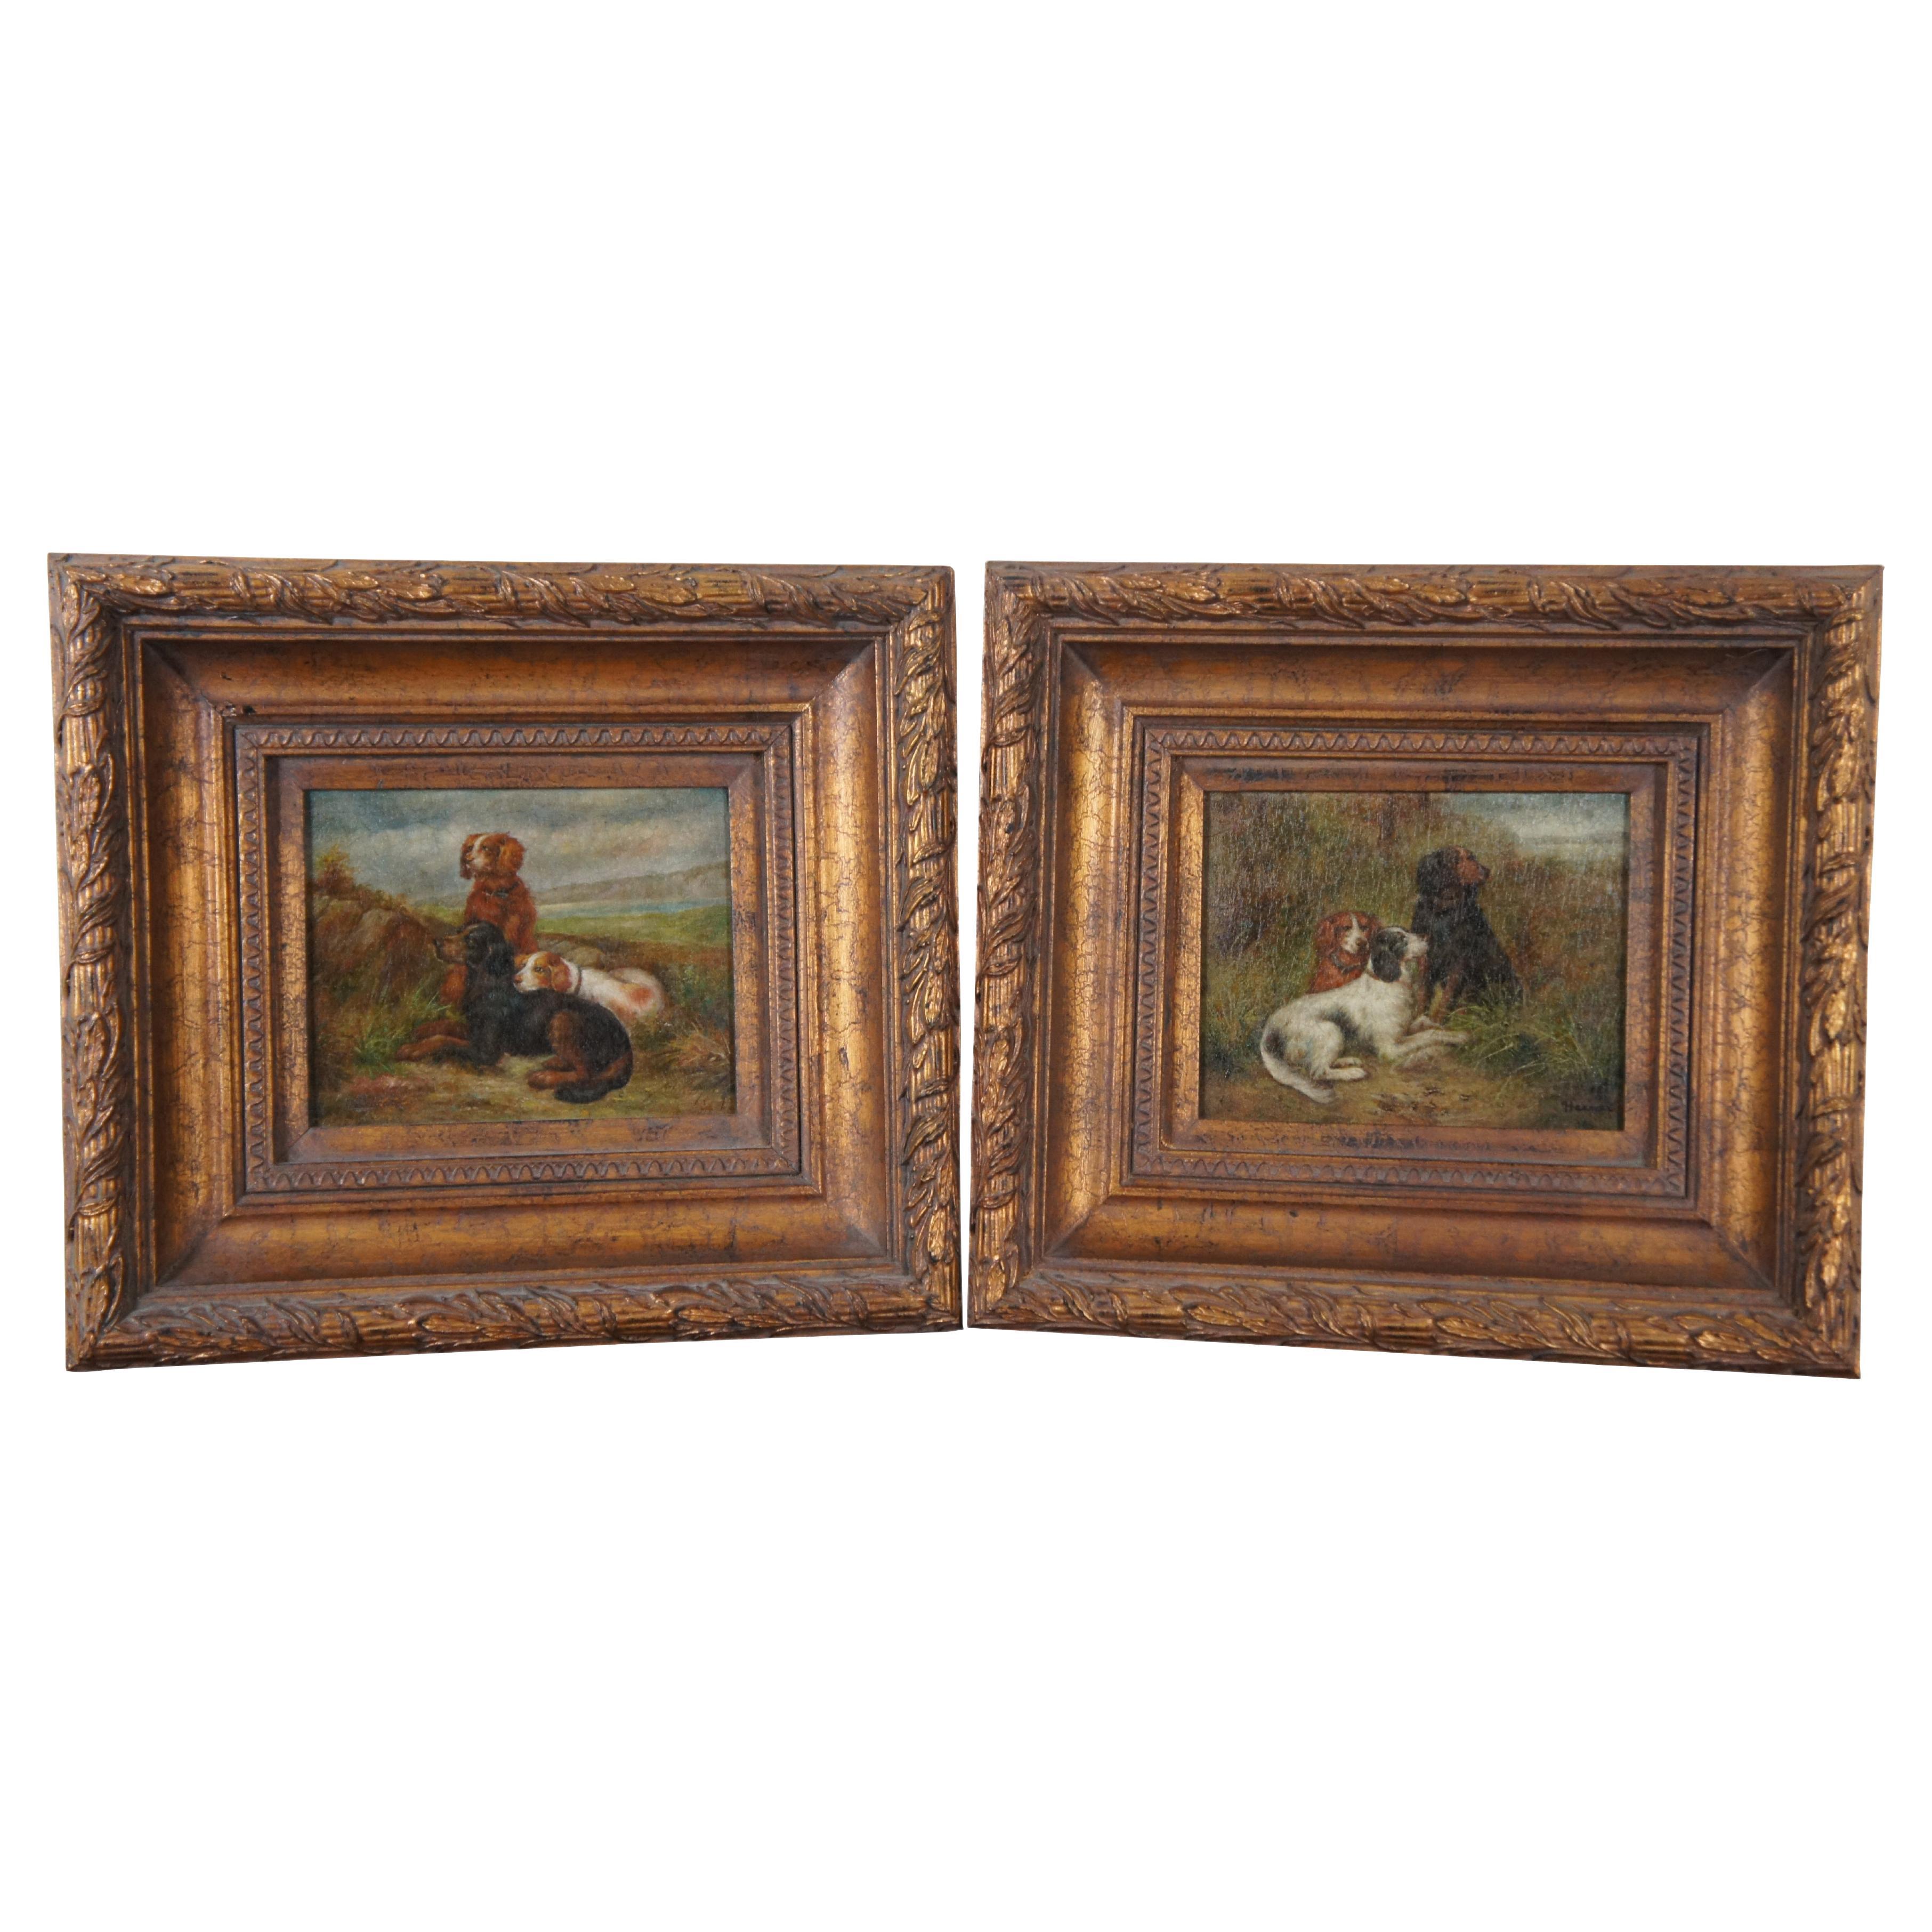 2 Vintage Spaniel Dog Portrait Oil Paintings on Canvas Gold Frames 20"